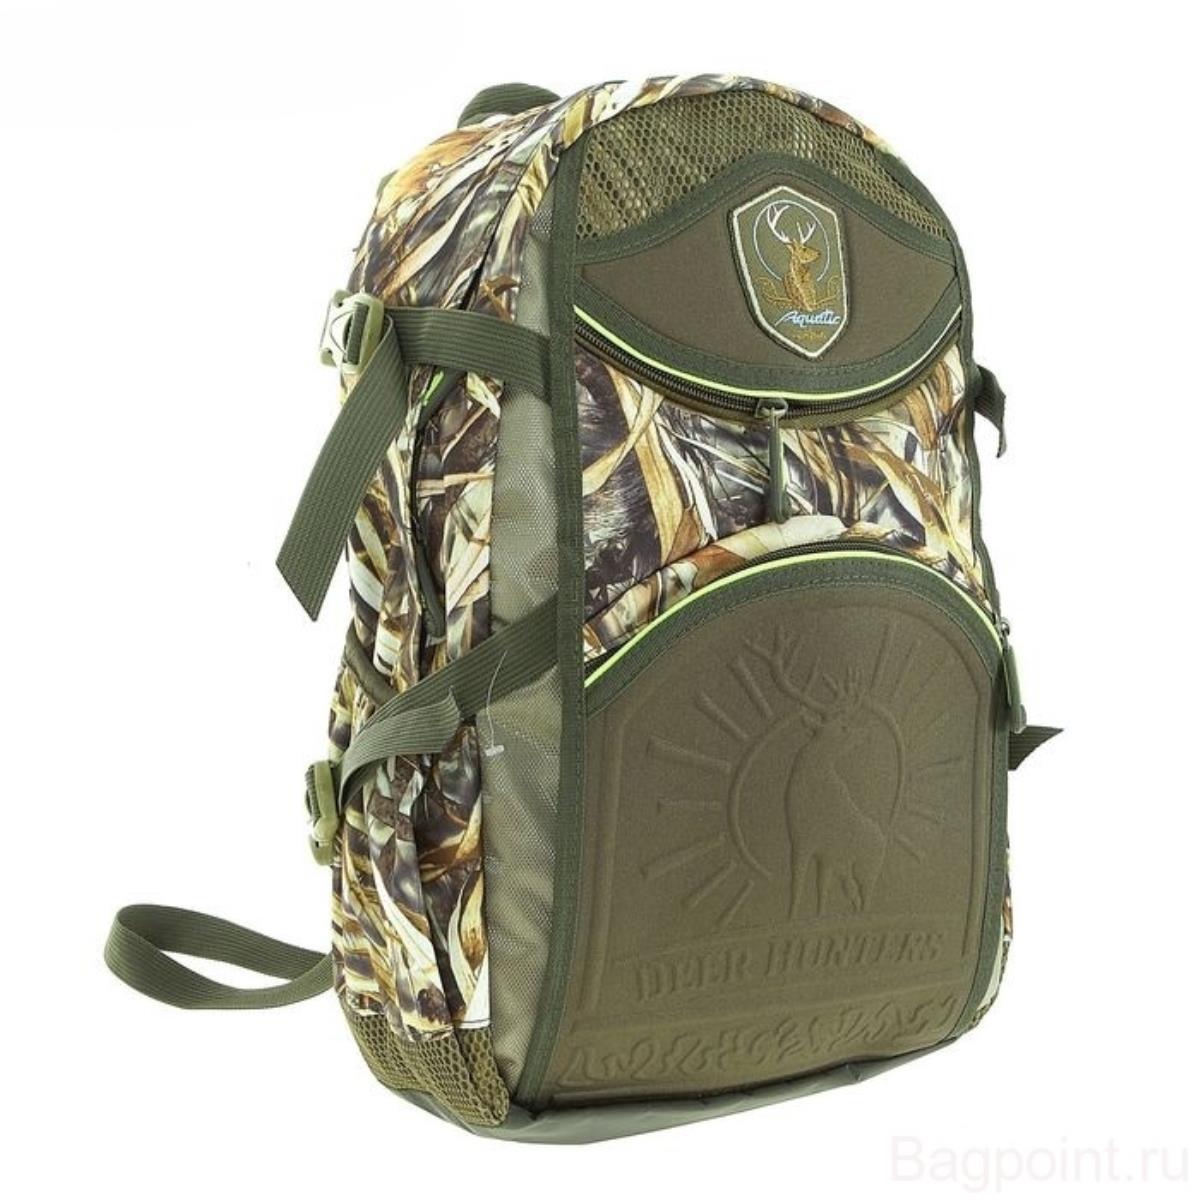 Рюкзак для охоты 32л (РО-32) Aquatic рюкзак для охоты ро 66 aquatic